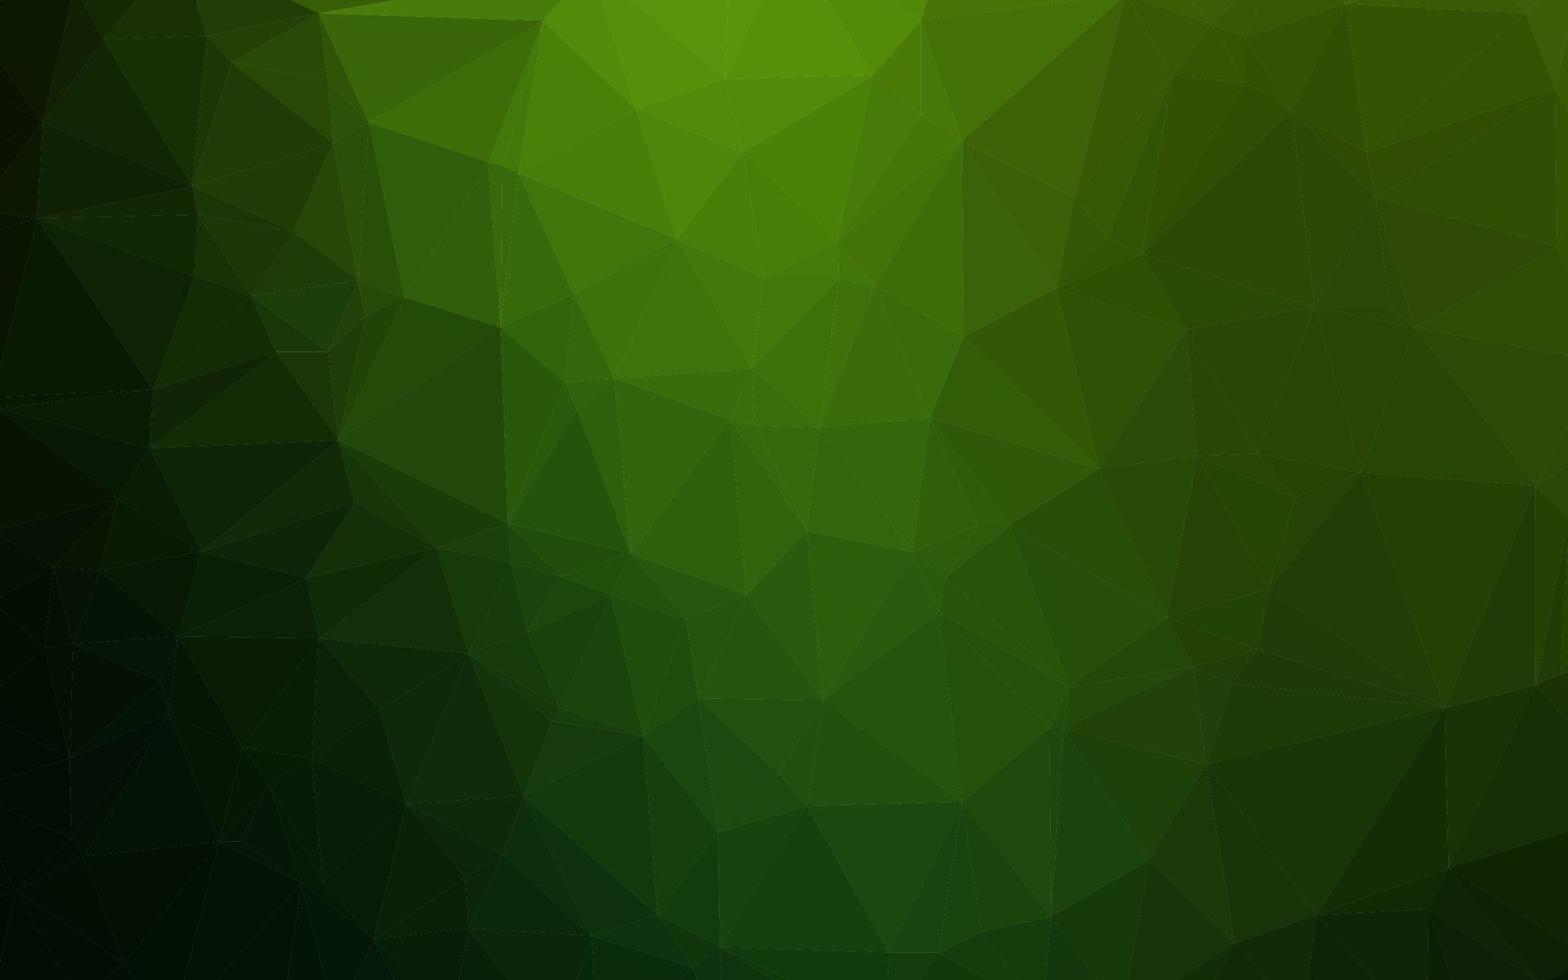 cenário de mosaico abstrato de vetor verde claro.